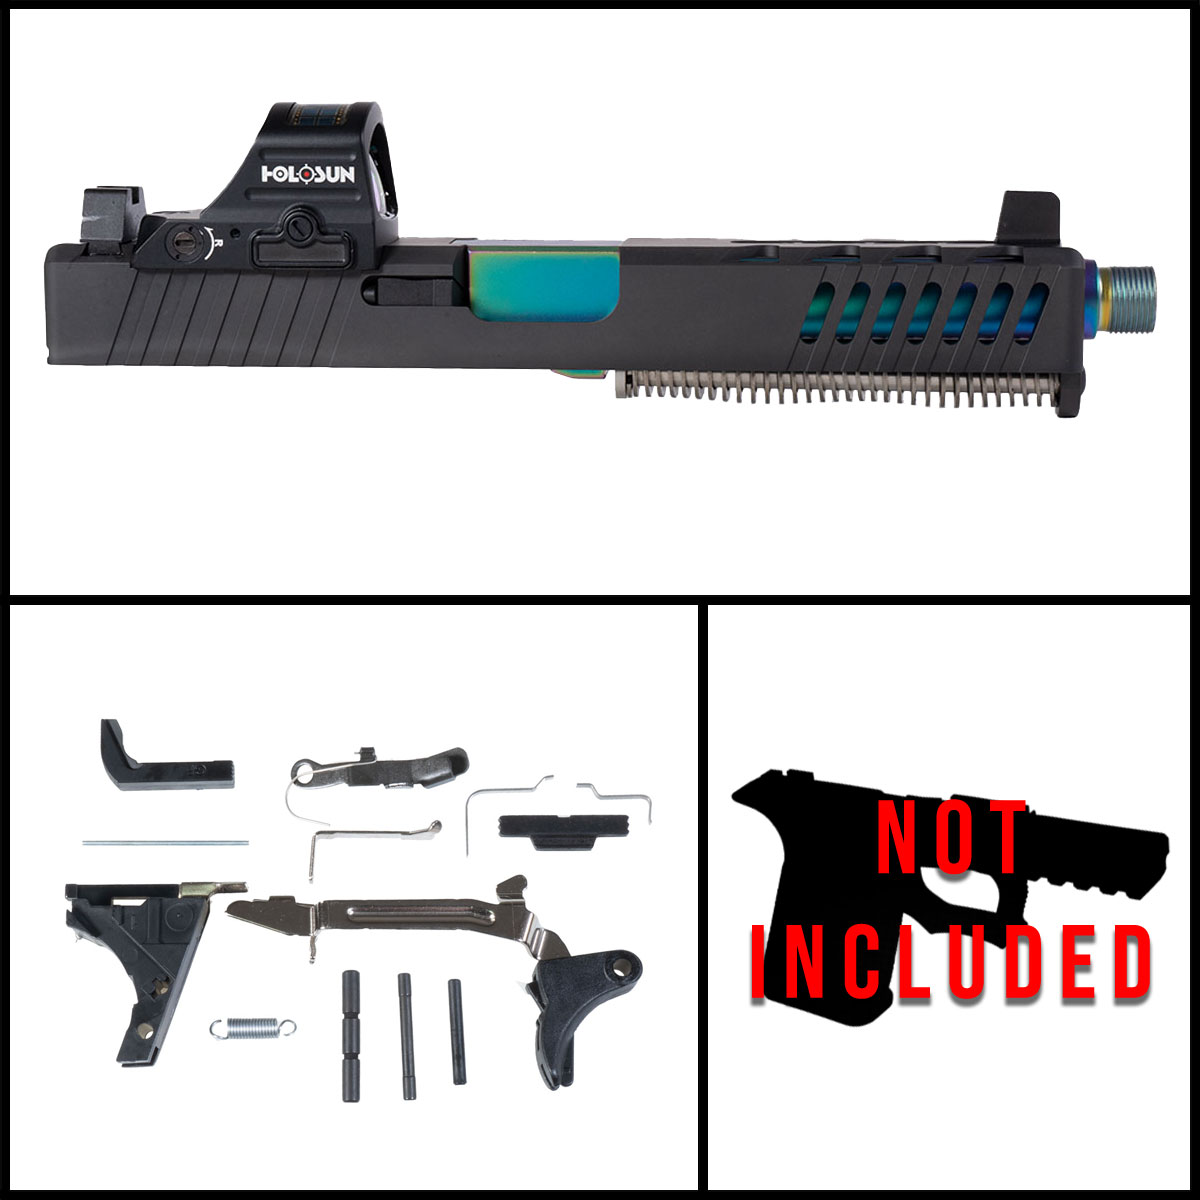 DTT 'Shining Express w/Red Dot' 9mm Full Pistol Build Kit (Everything Minus Frame) - Glock 17 Gen 1-3 Compatible